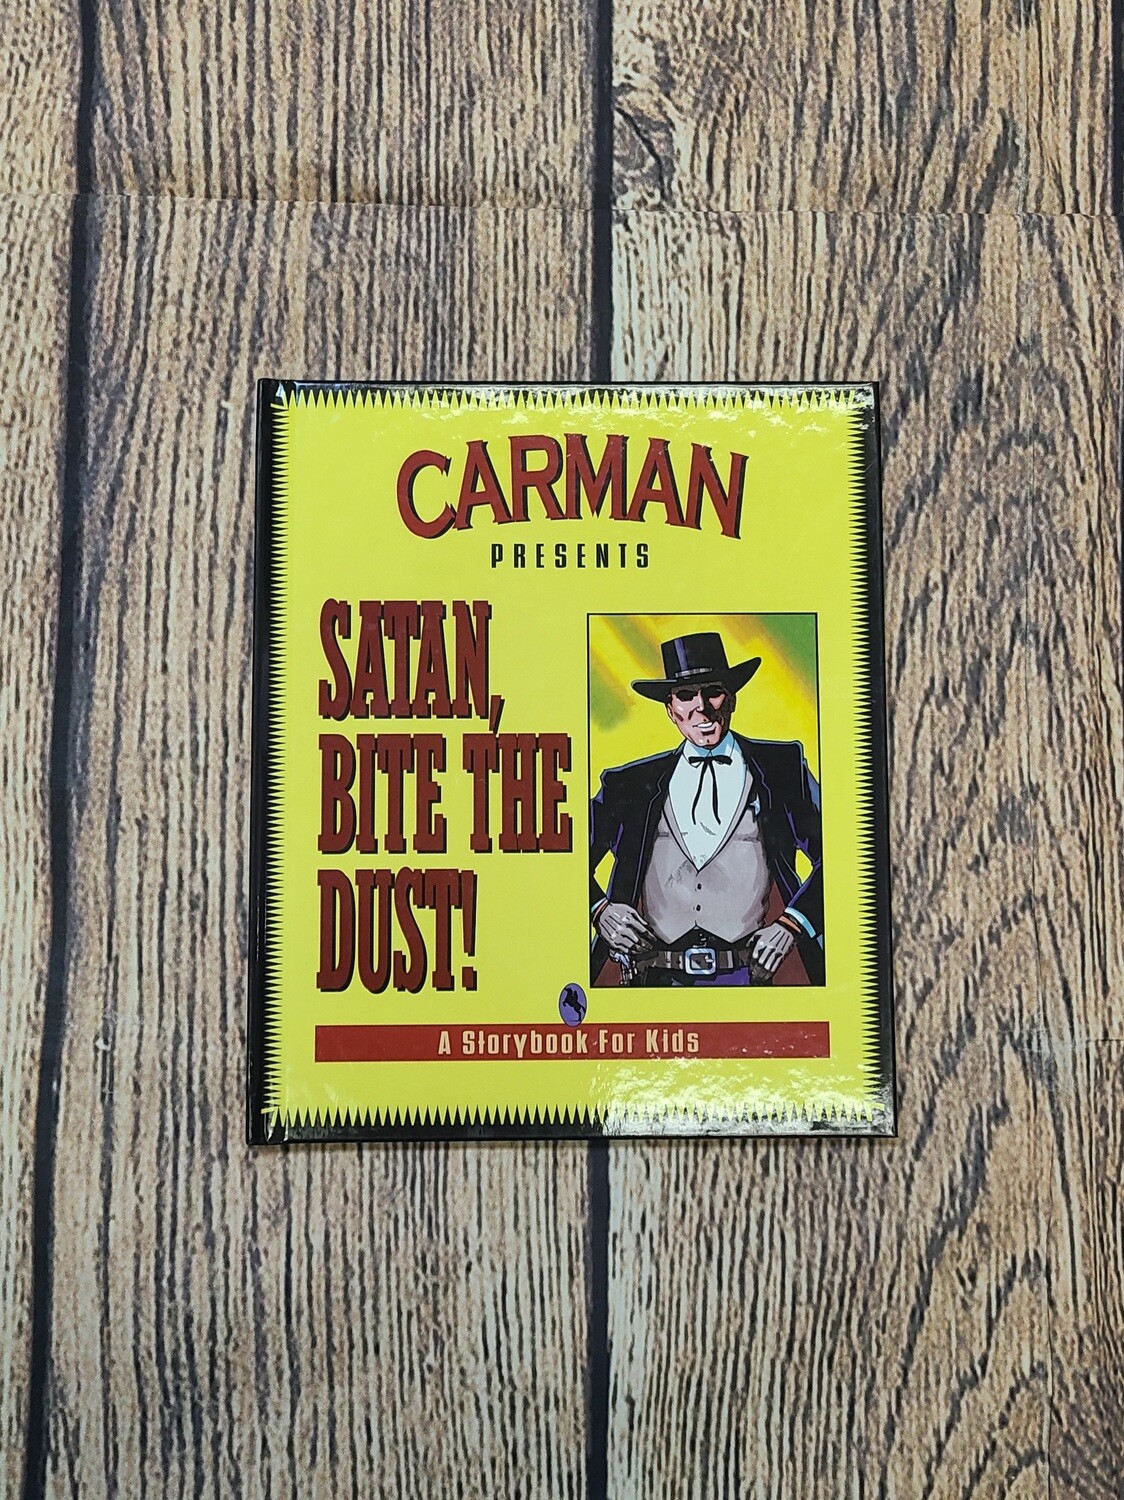 Satan, Bite the Dust! by Carman Ministries